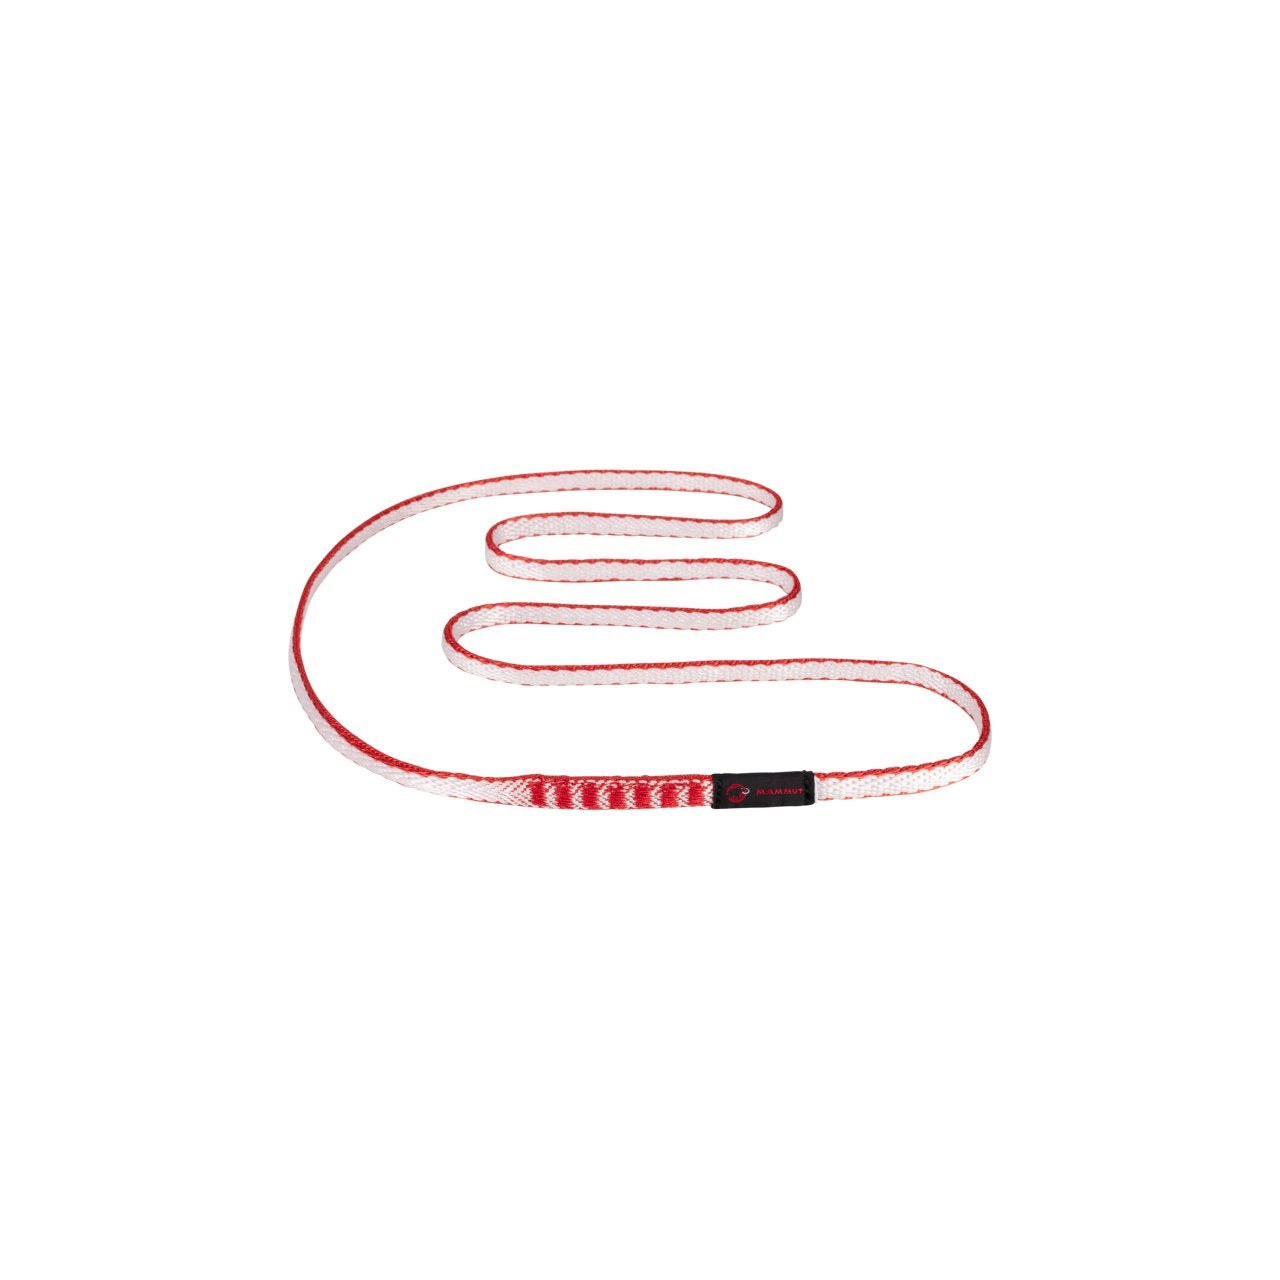 Contact Sling 8.0 (60cm) - rouge, anneau cousu